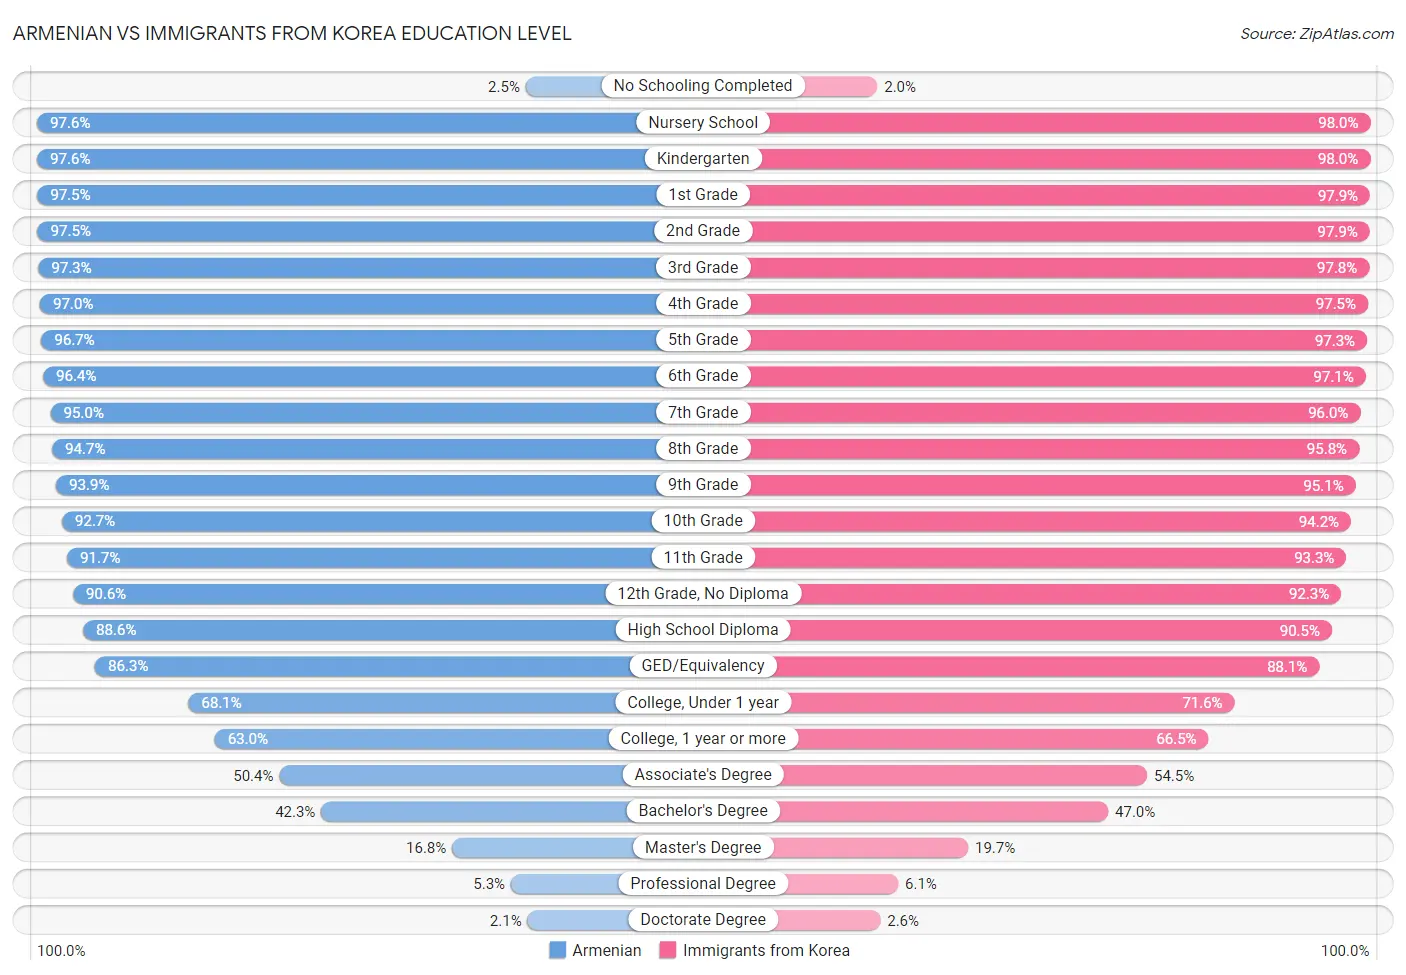 Armenian vs Immigrants from Korea Education Level